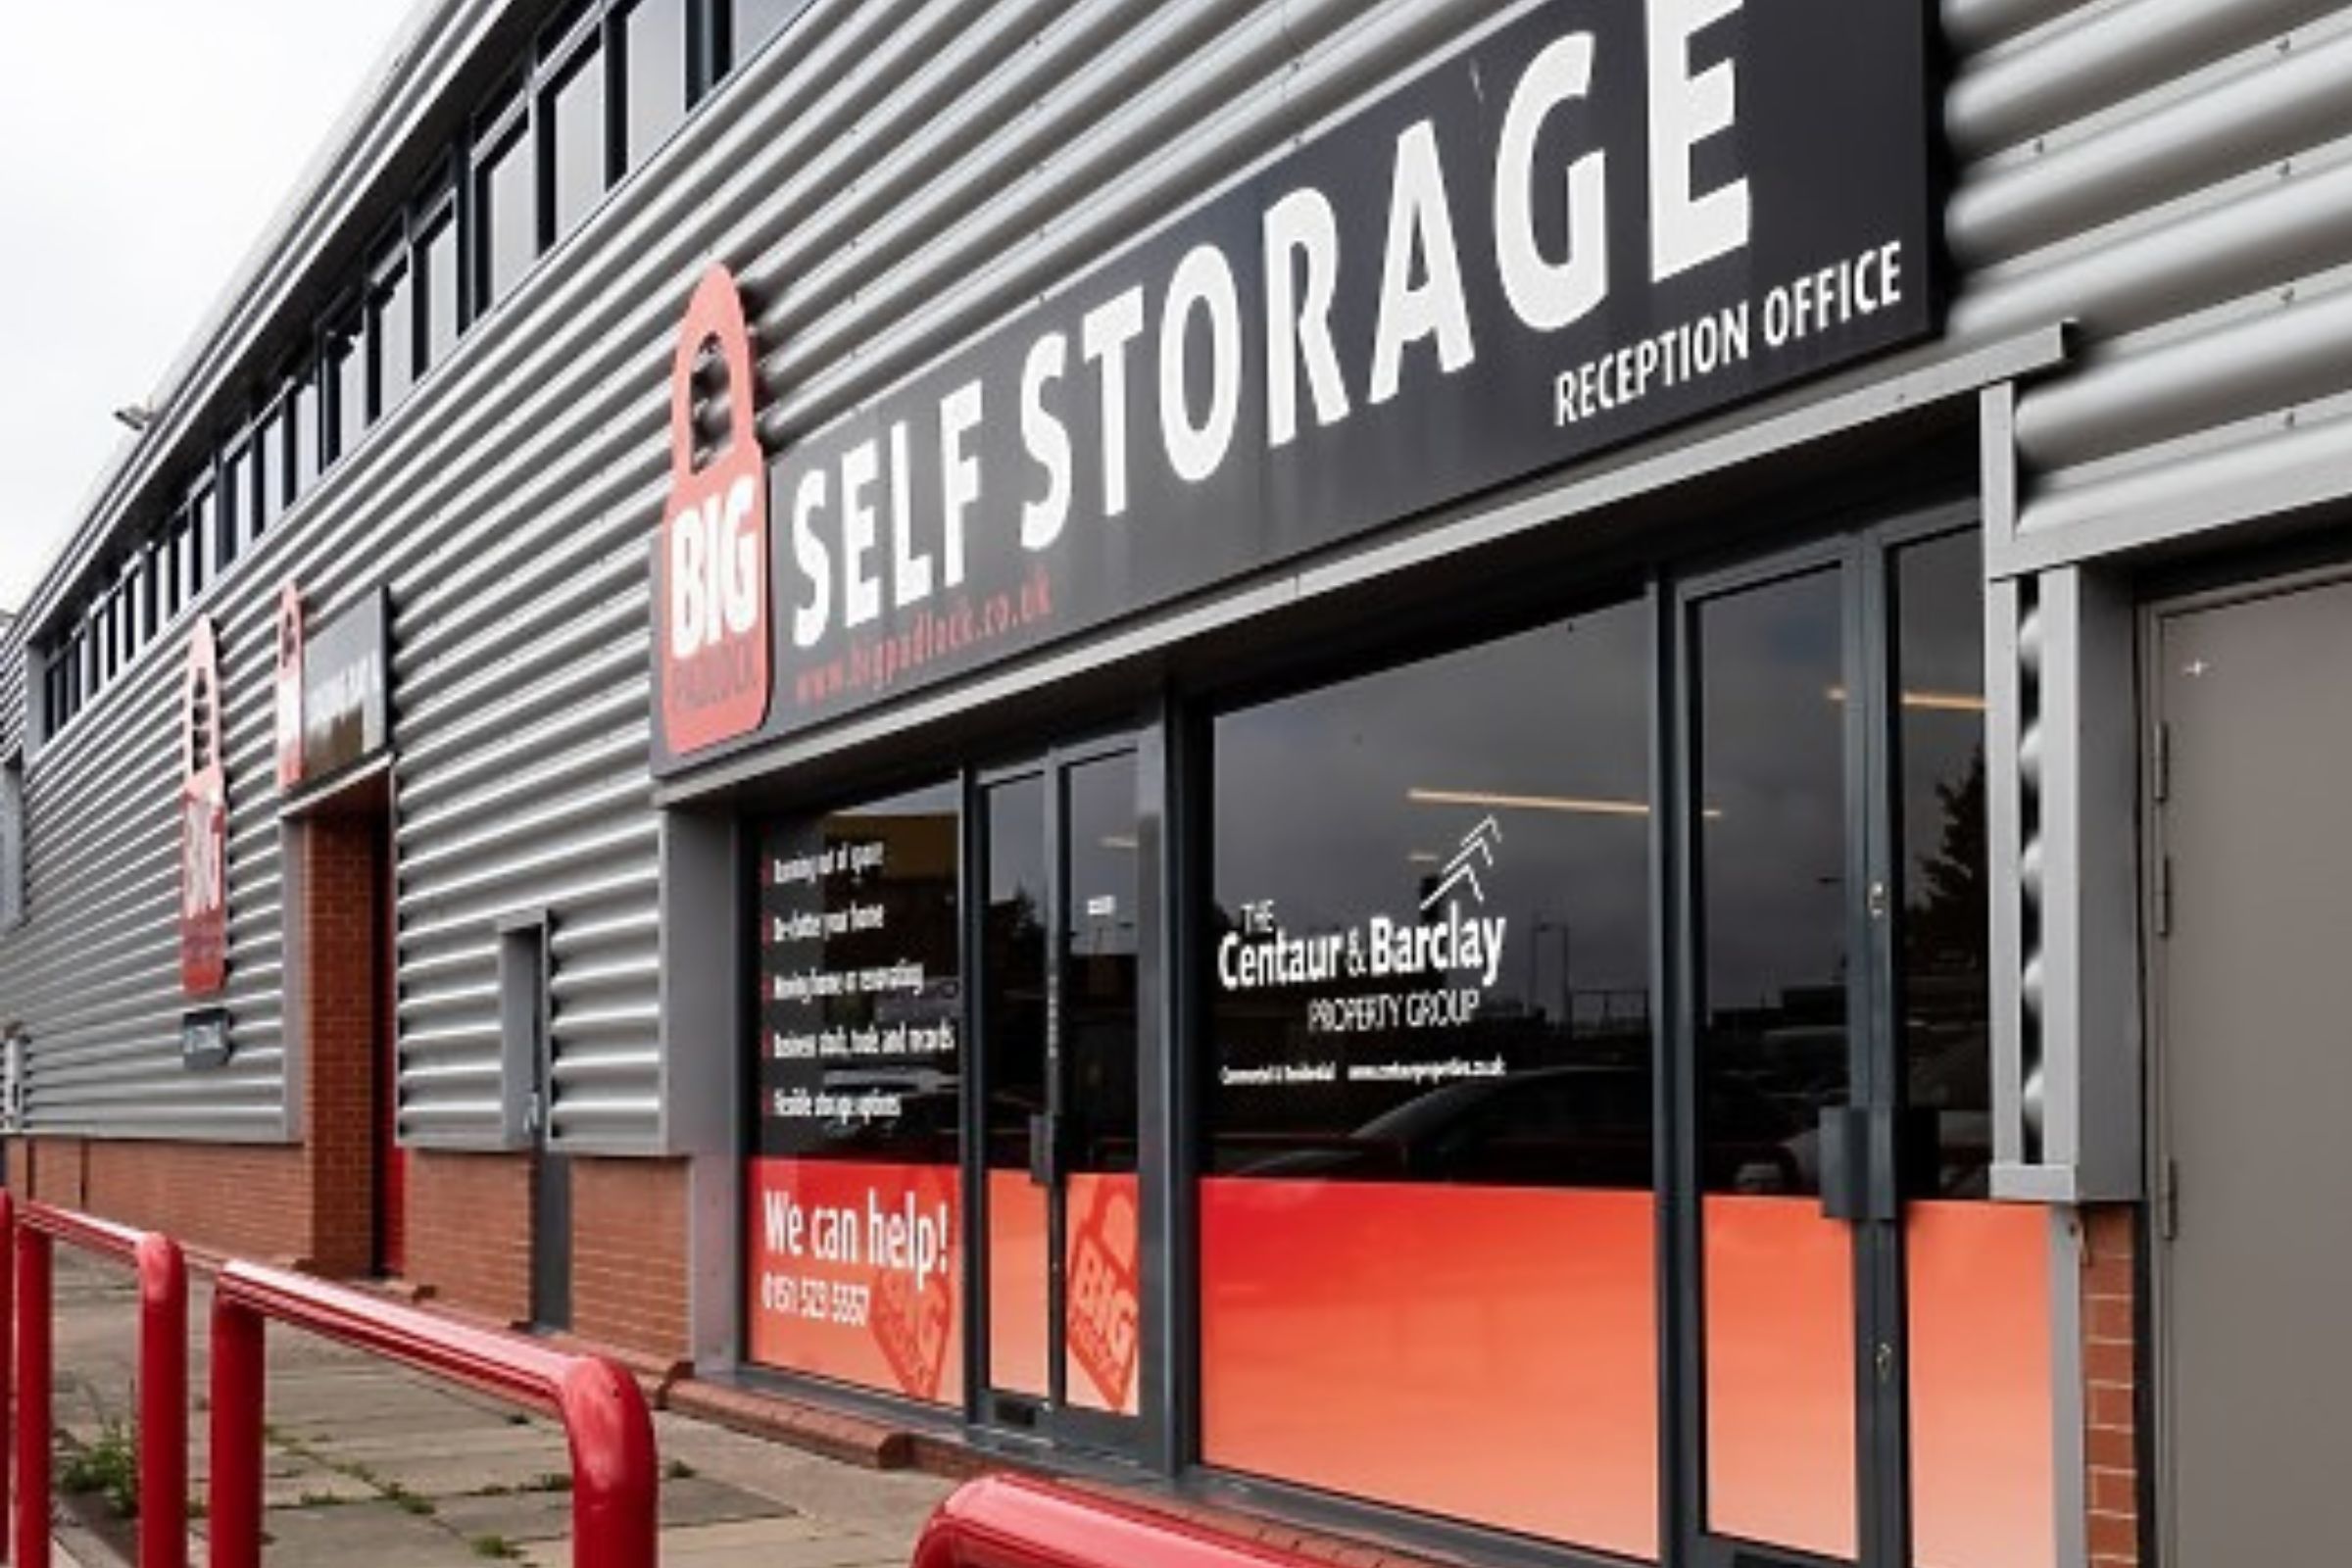 Liverpool Self Storage